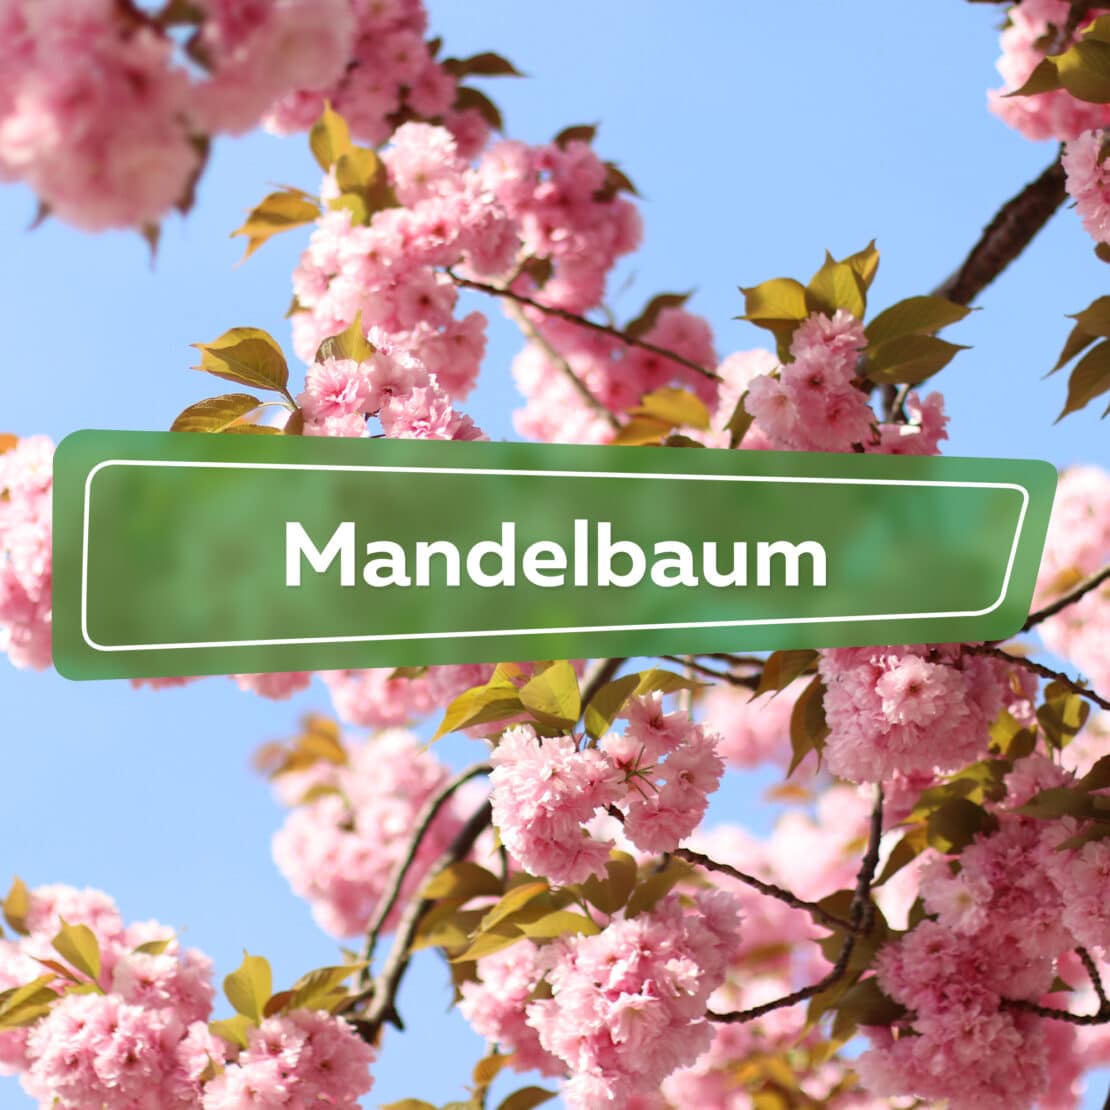 Mandelbaum